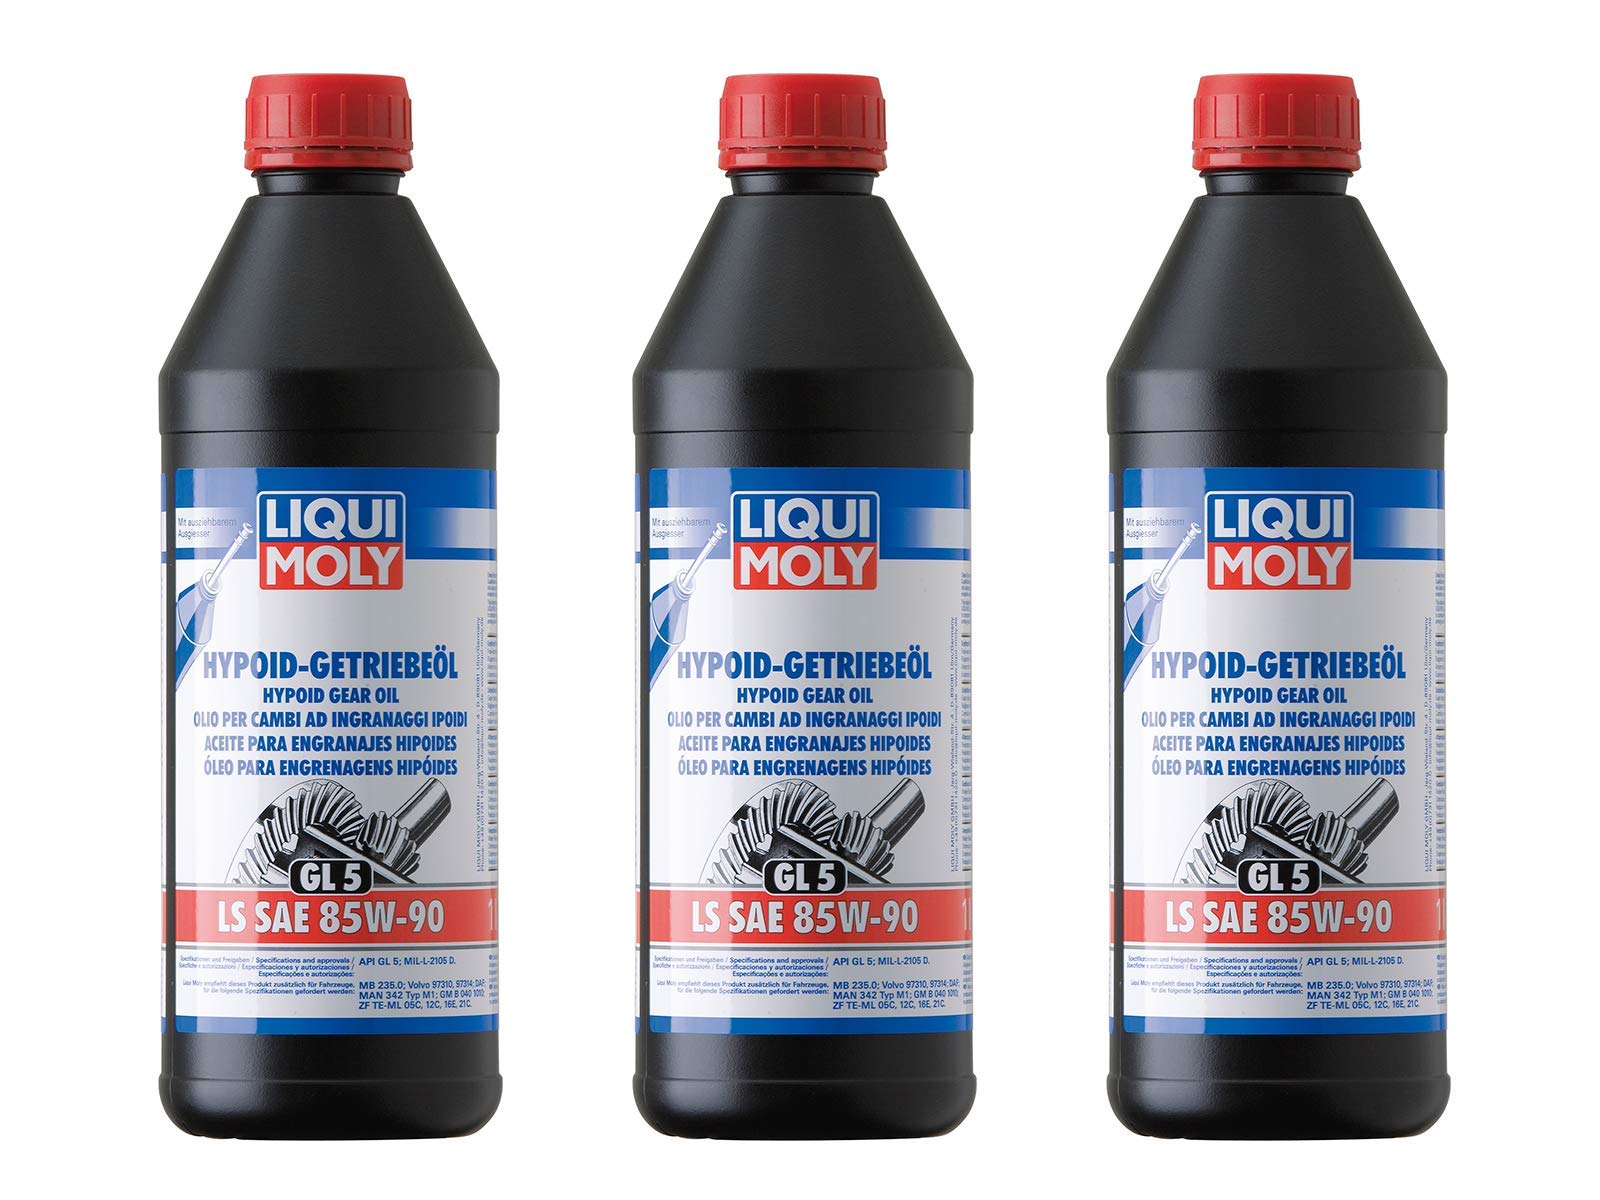 ILODA 3X Original Liqui Moly 1L Hypoid-Getriebeöl (GL5) LS SAE 85W-90 Gear Oil 1410 von ILODA